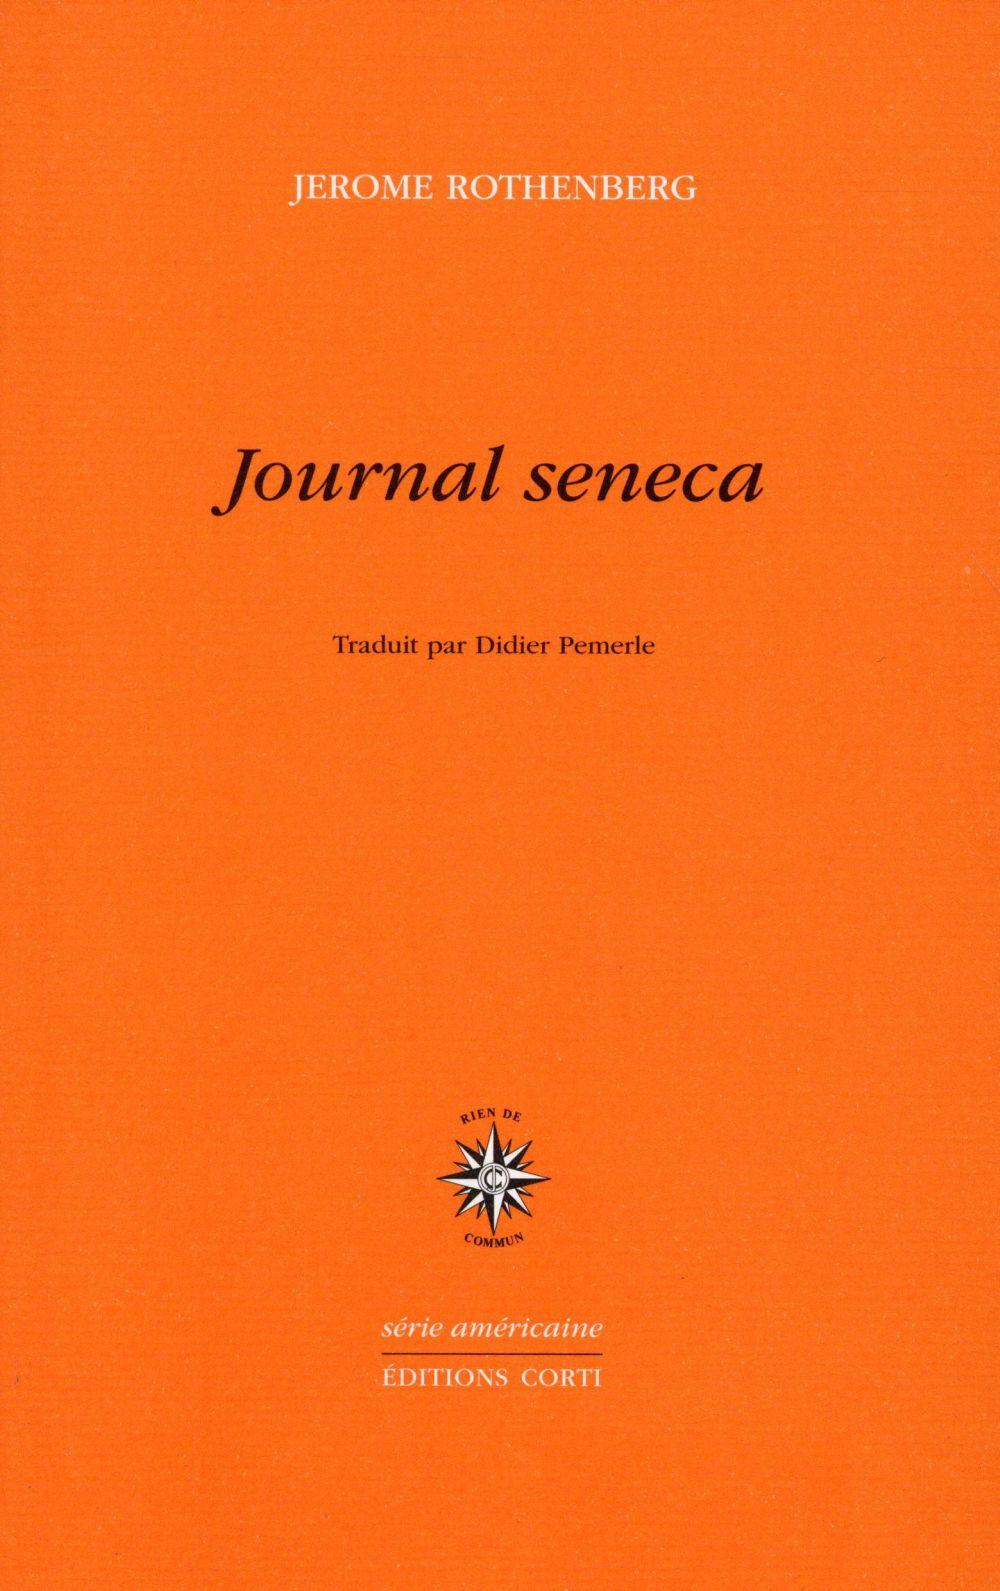 journal seneca - Rothenberg, Jerome